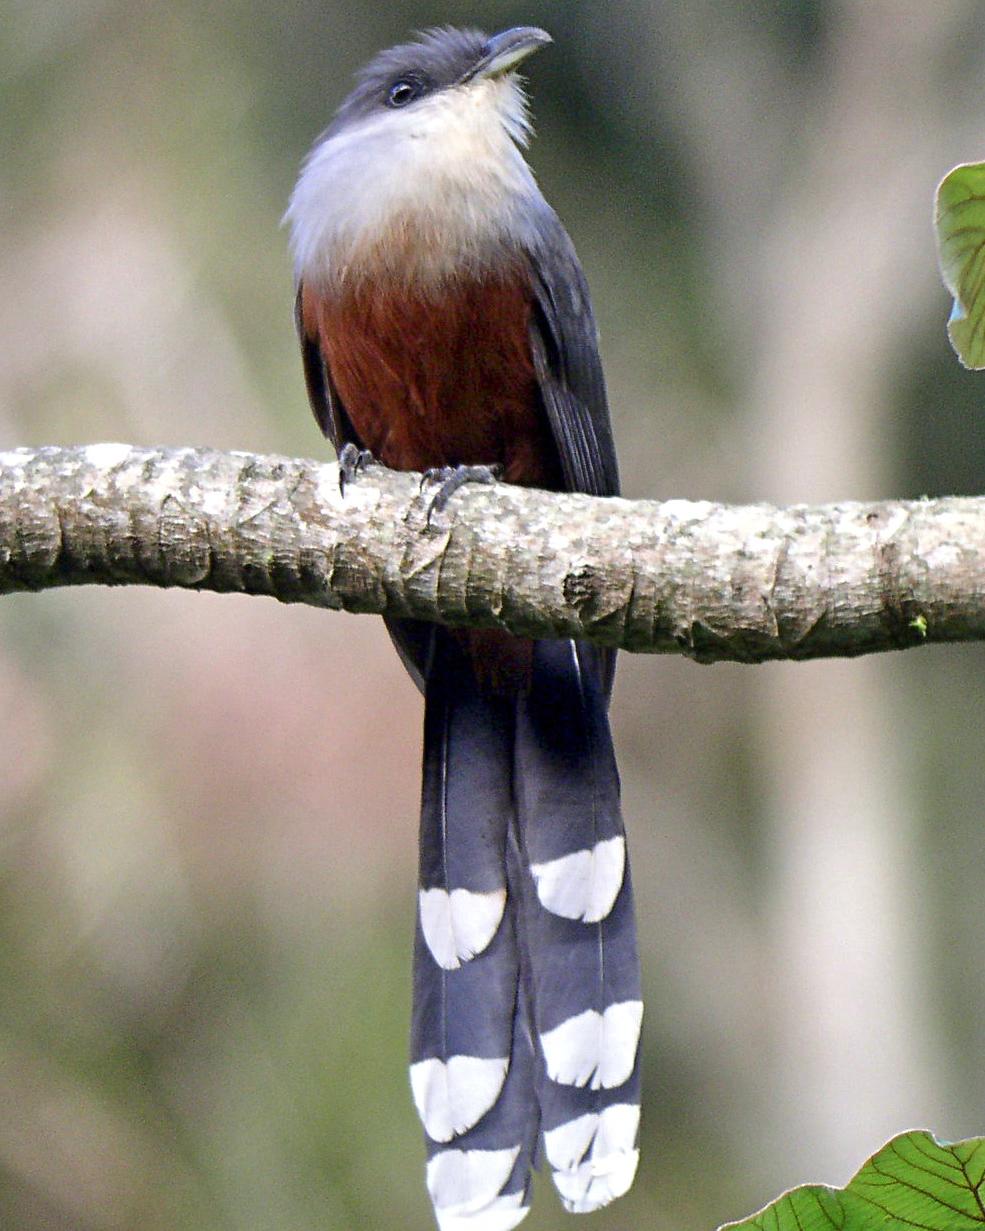 Chestnut-bellied Cuckoo Photo by Richard C. Hoyer